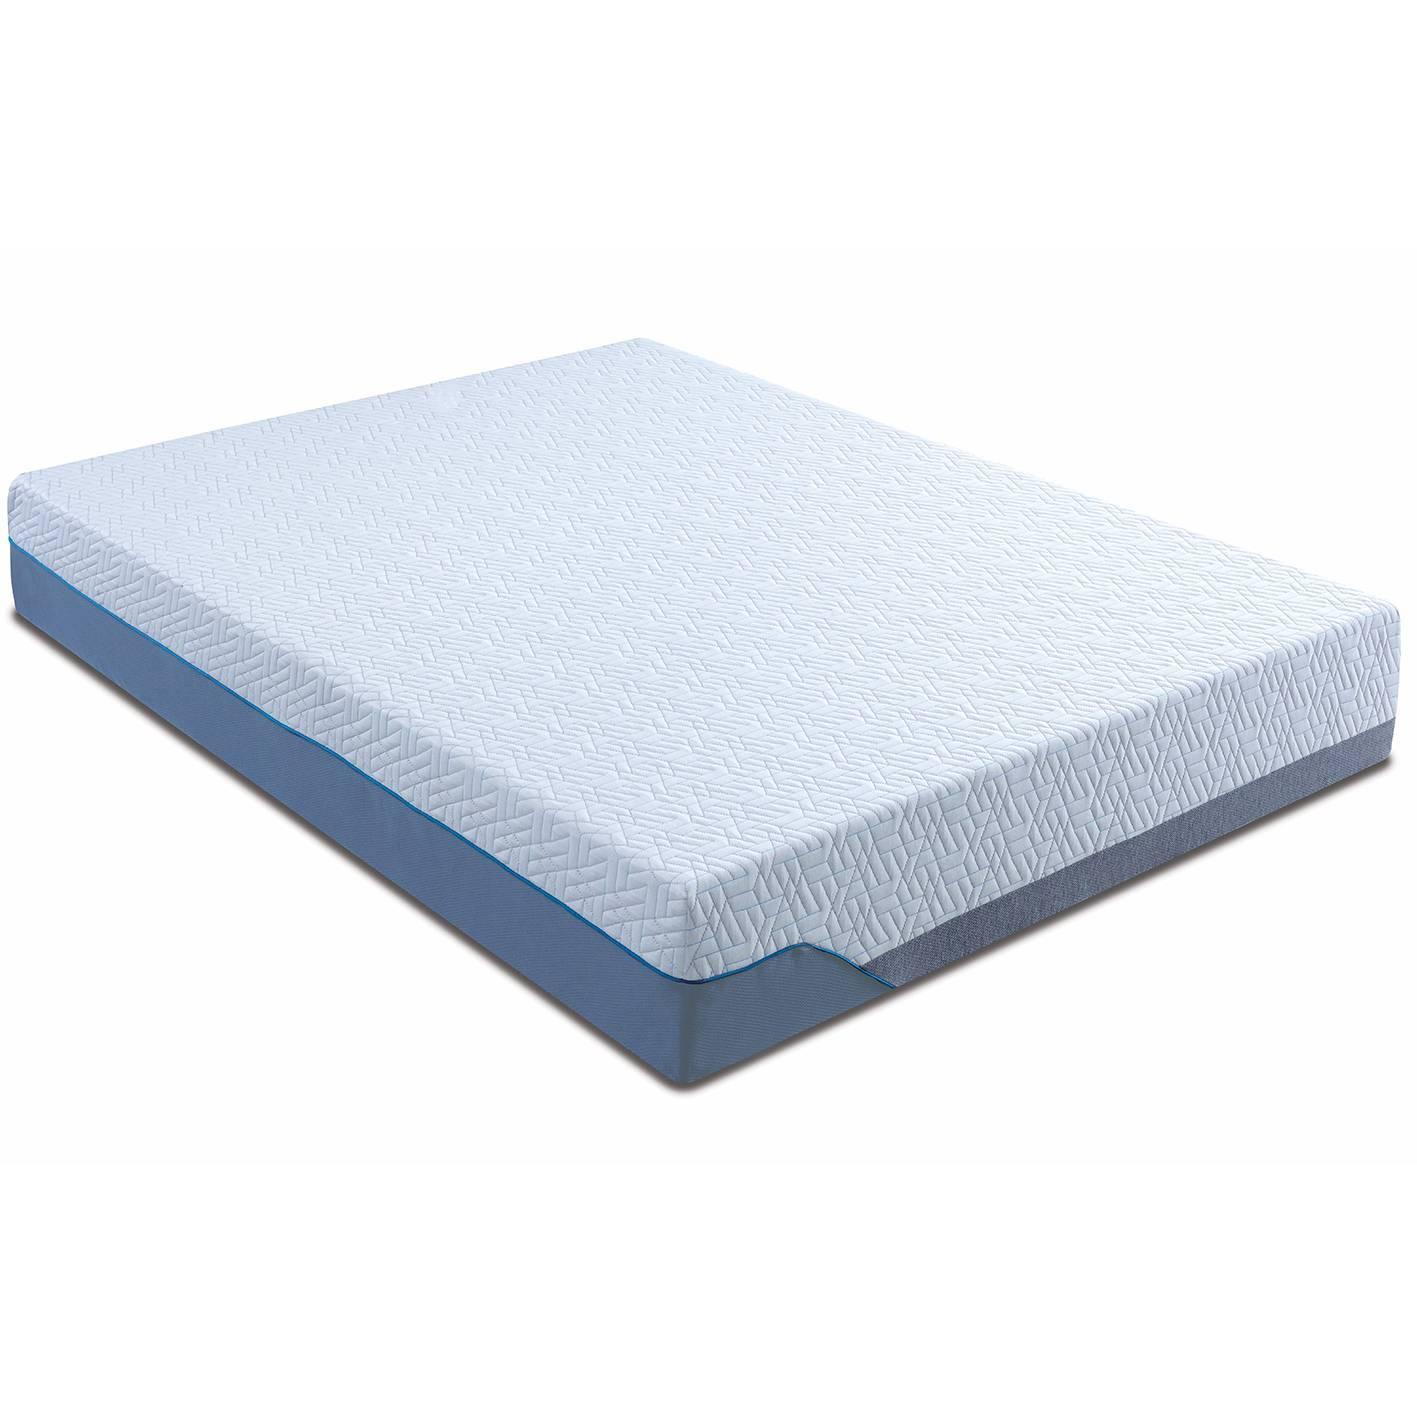 Pocket sprung mattress King 150cm - Laura James